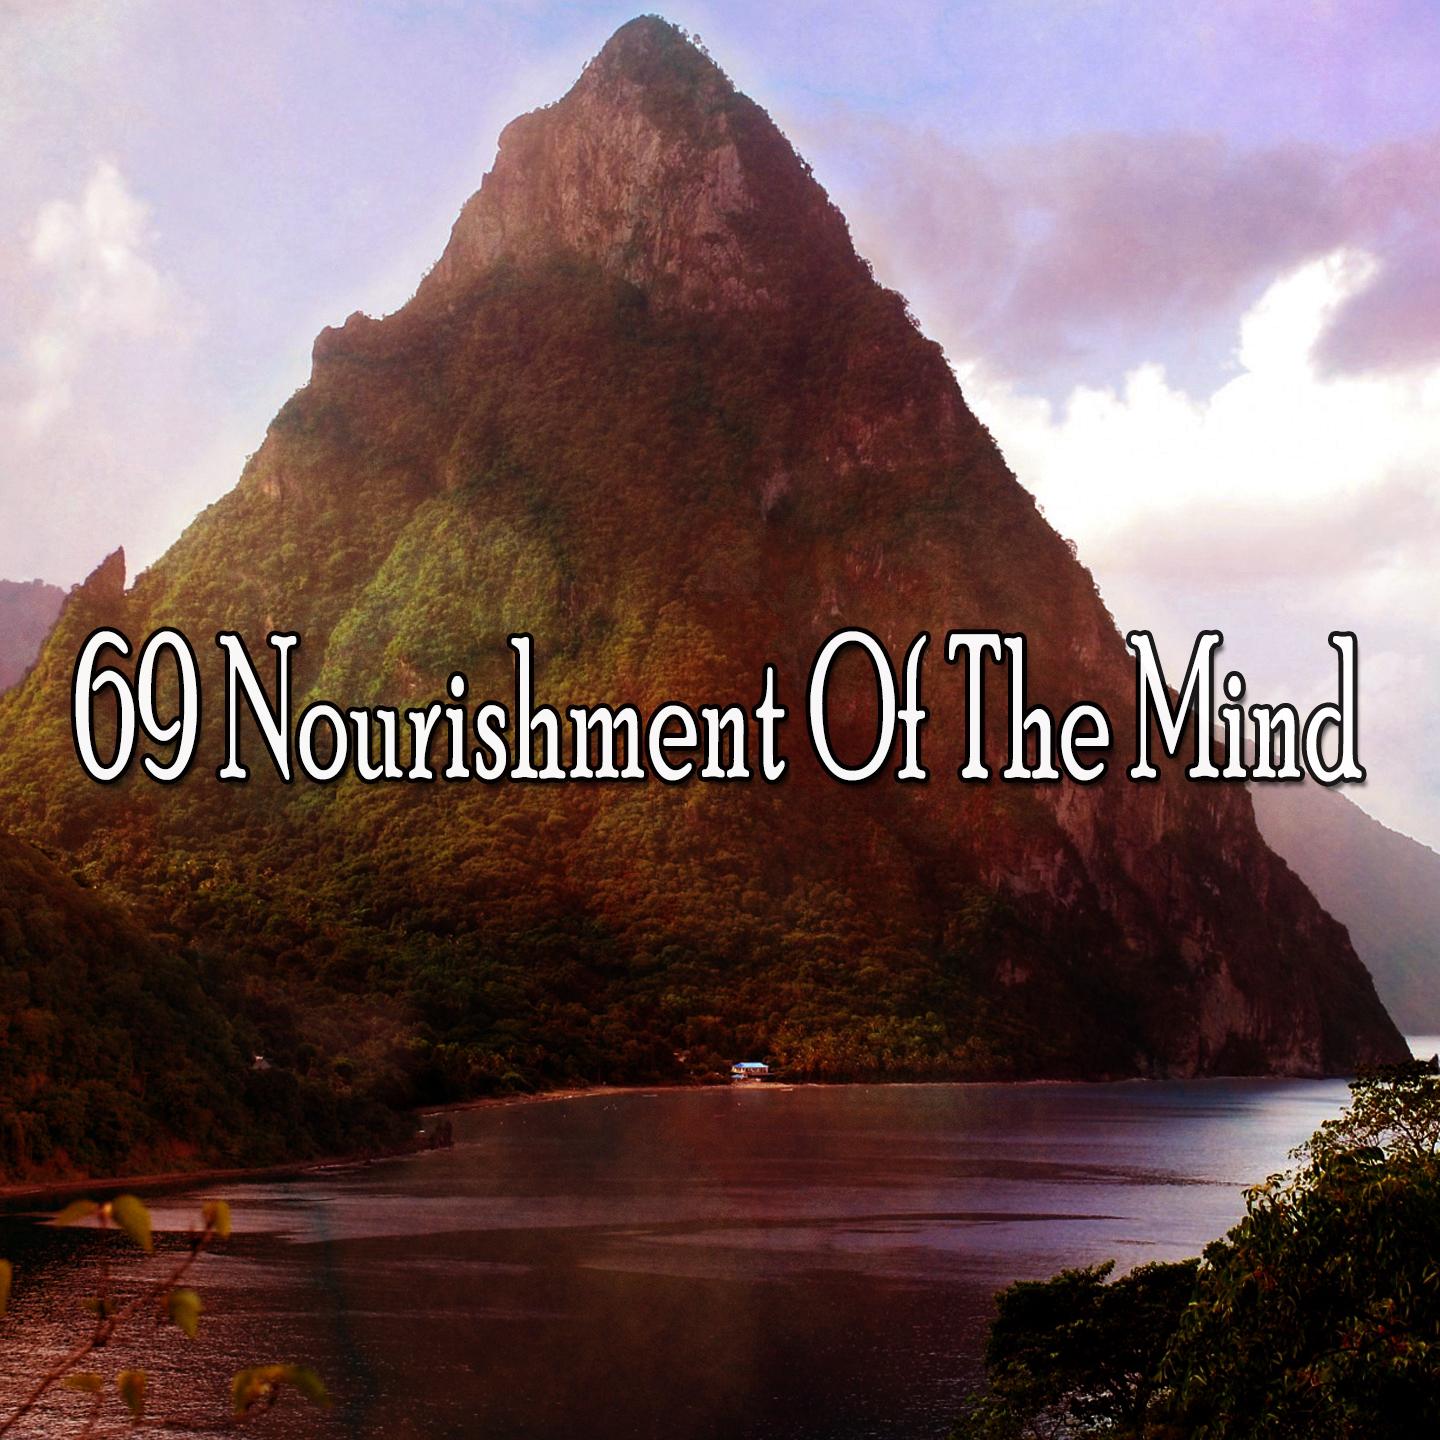 69 Nourishment of the Mind